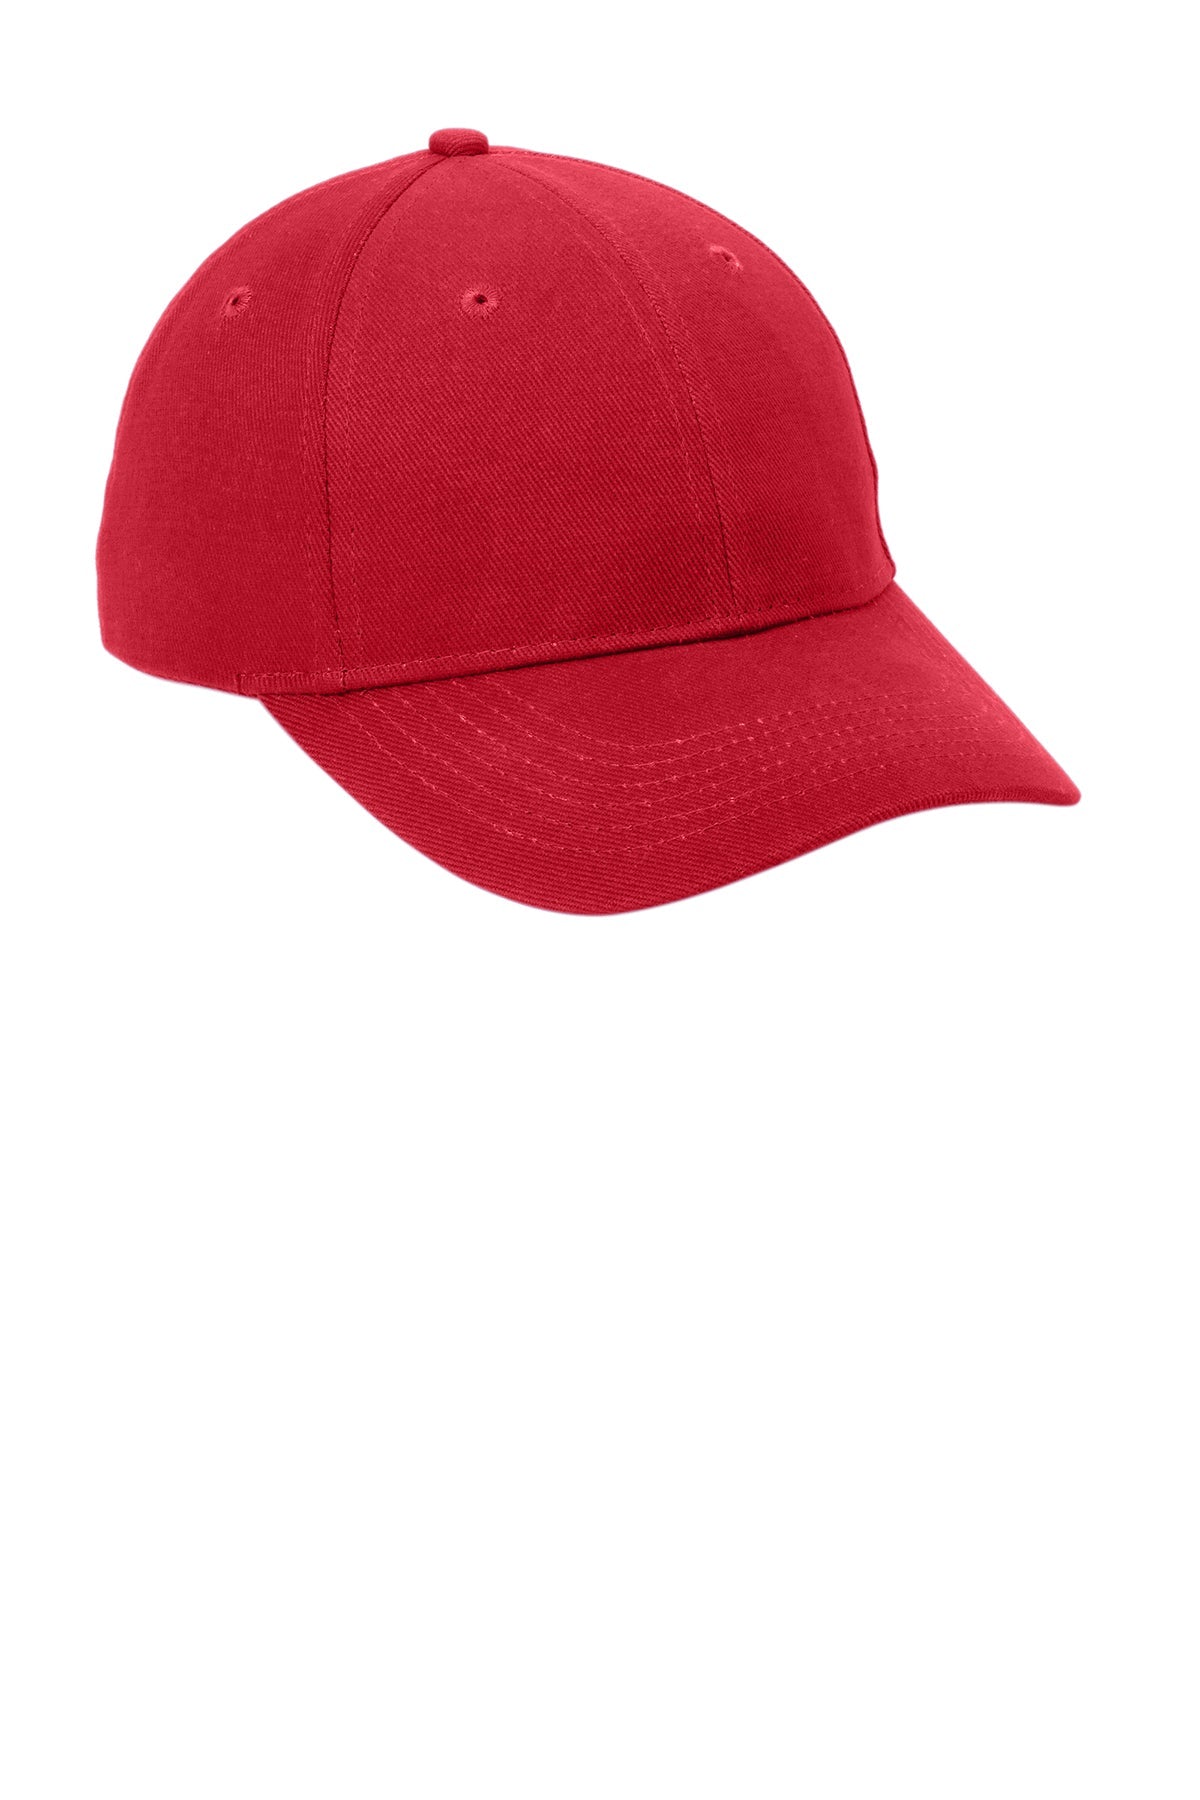 Port & Company Brushed Twill Custom Caps, Red